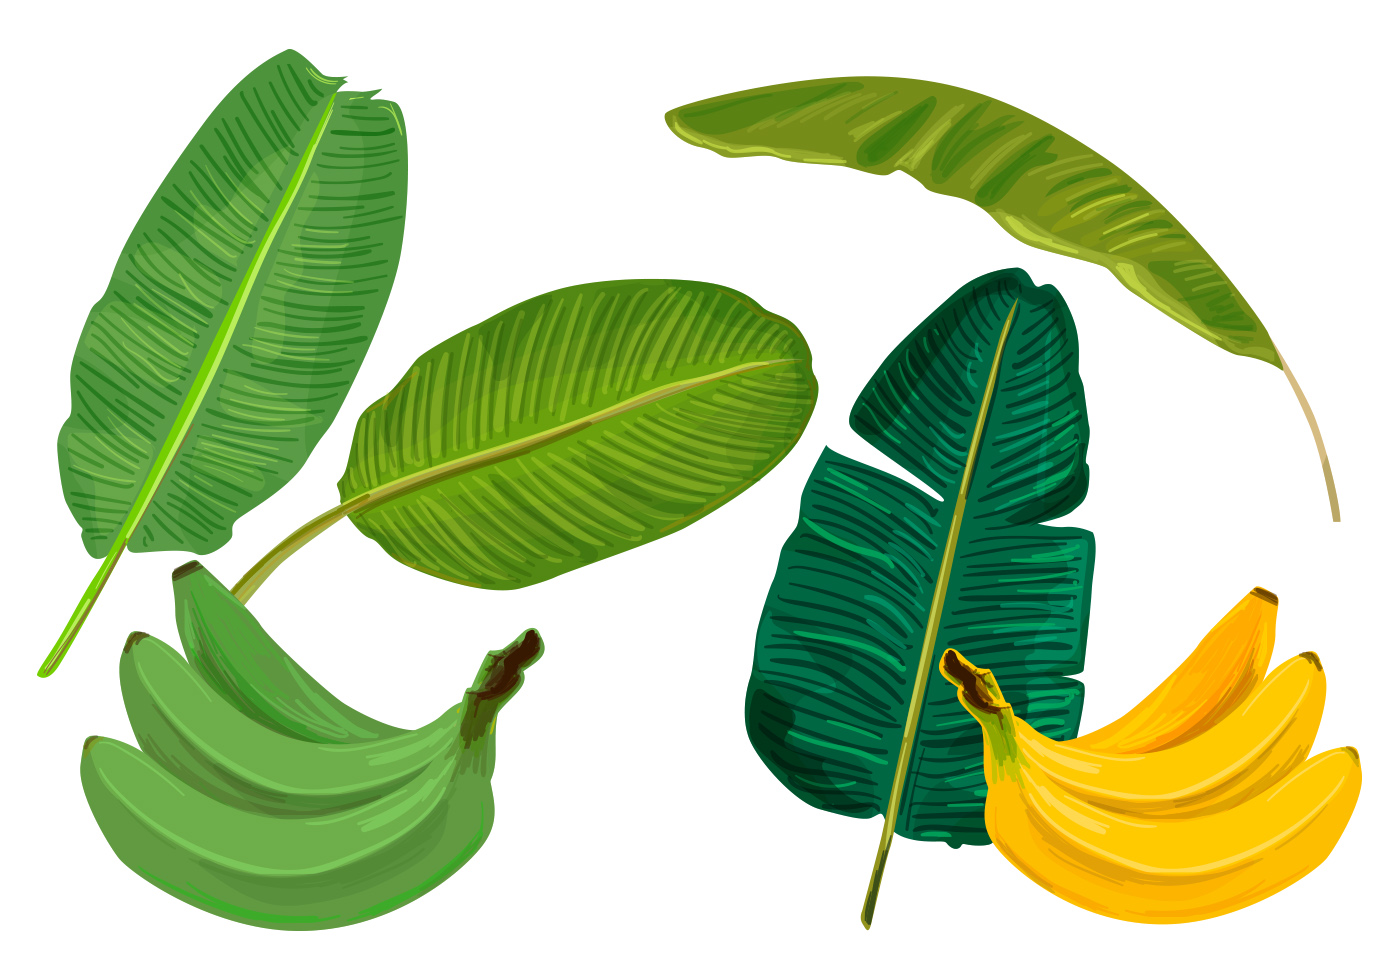 Banana Leaves Vectors Download Free Vector Art, Stock